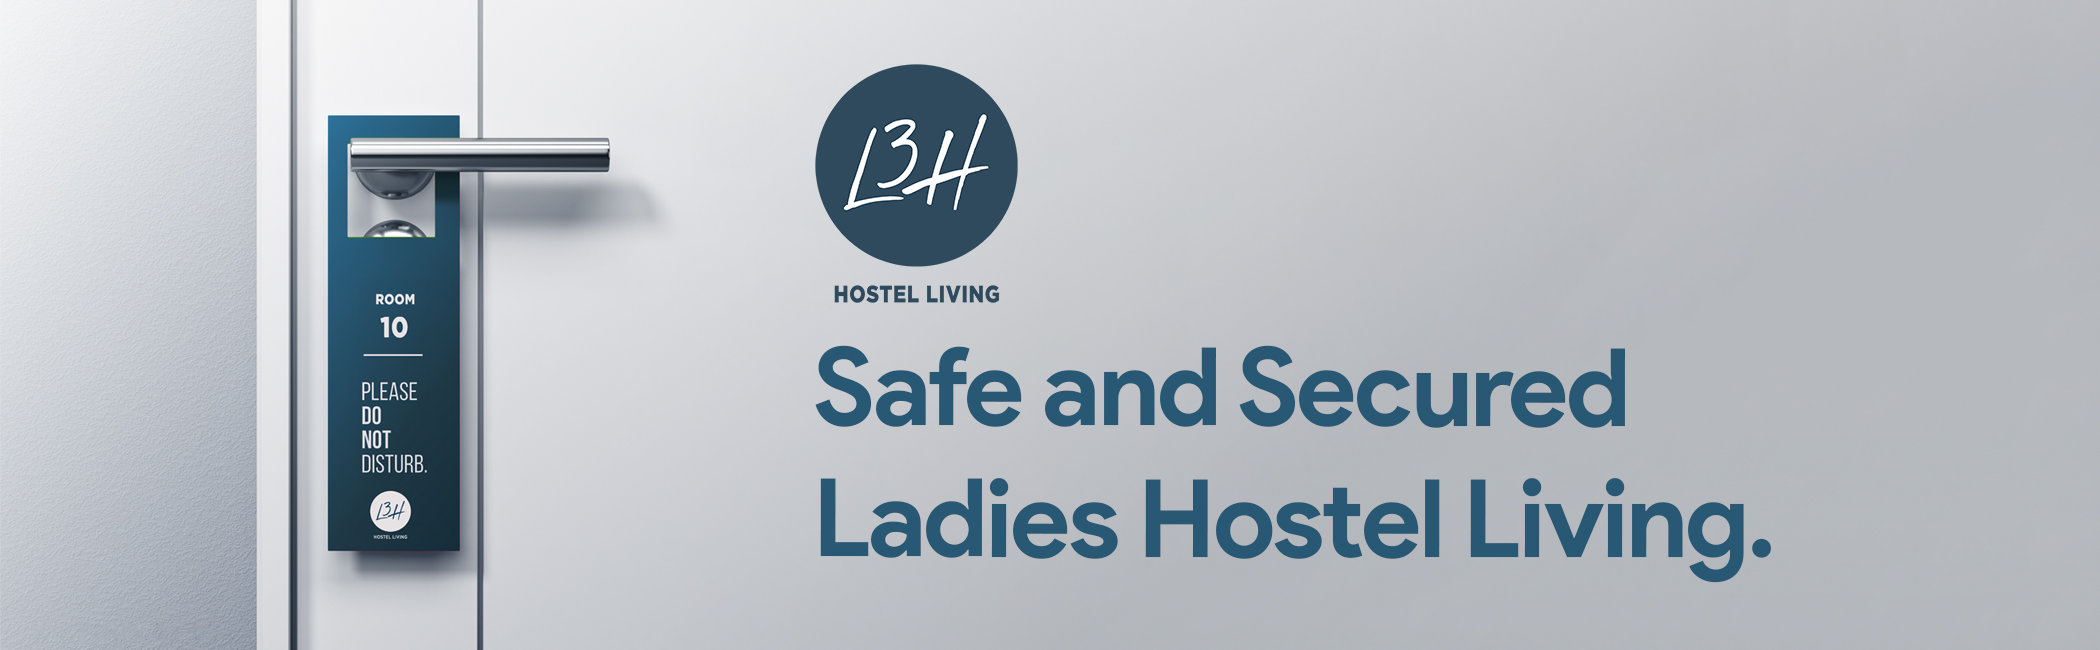 safe and secured ladies hostel living